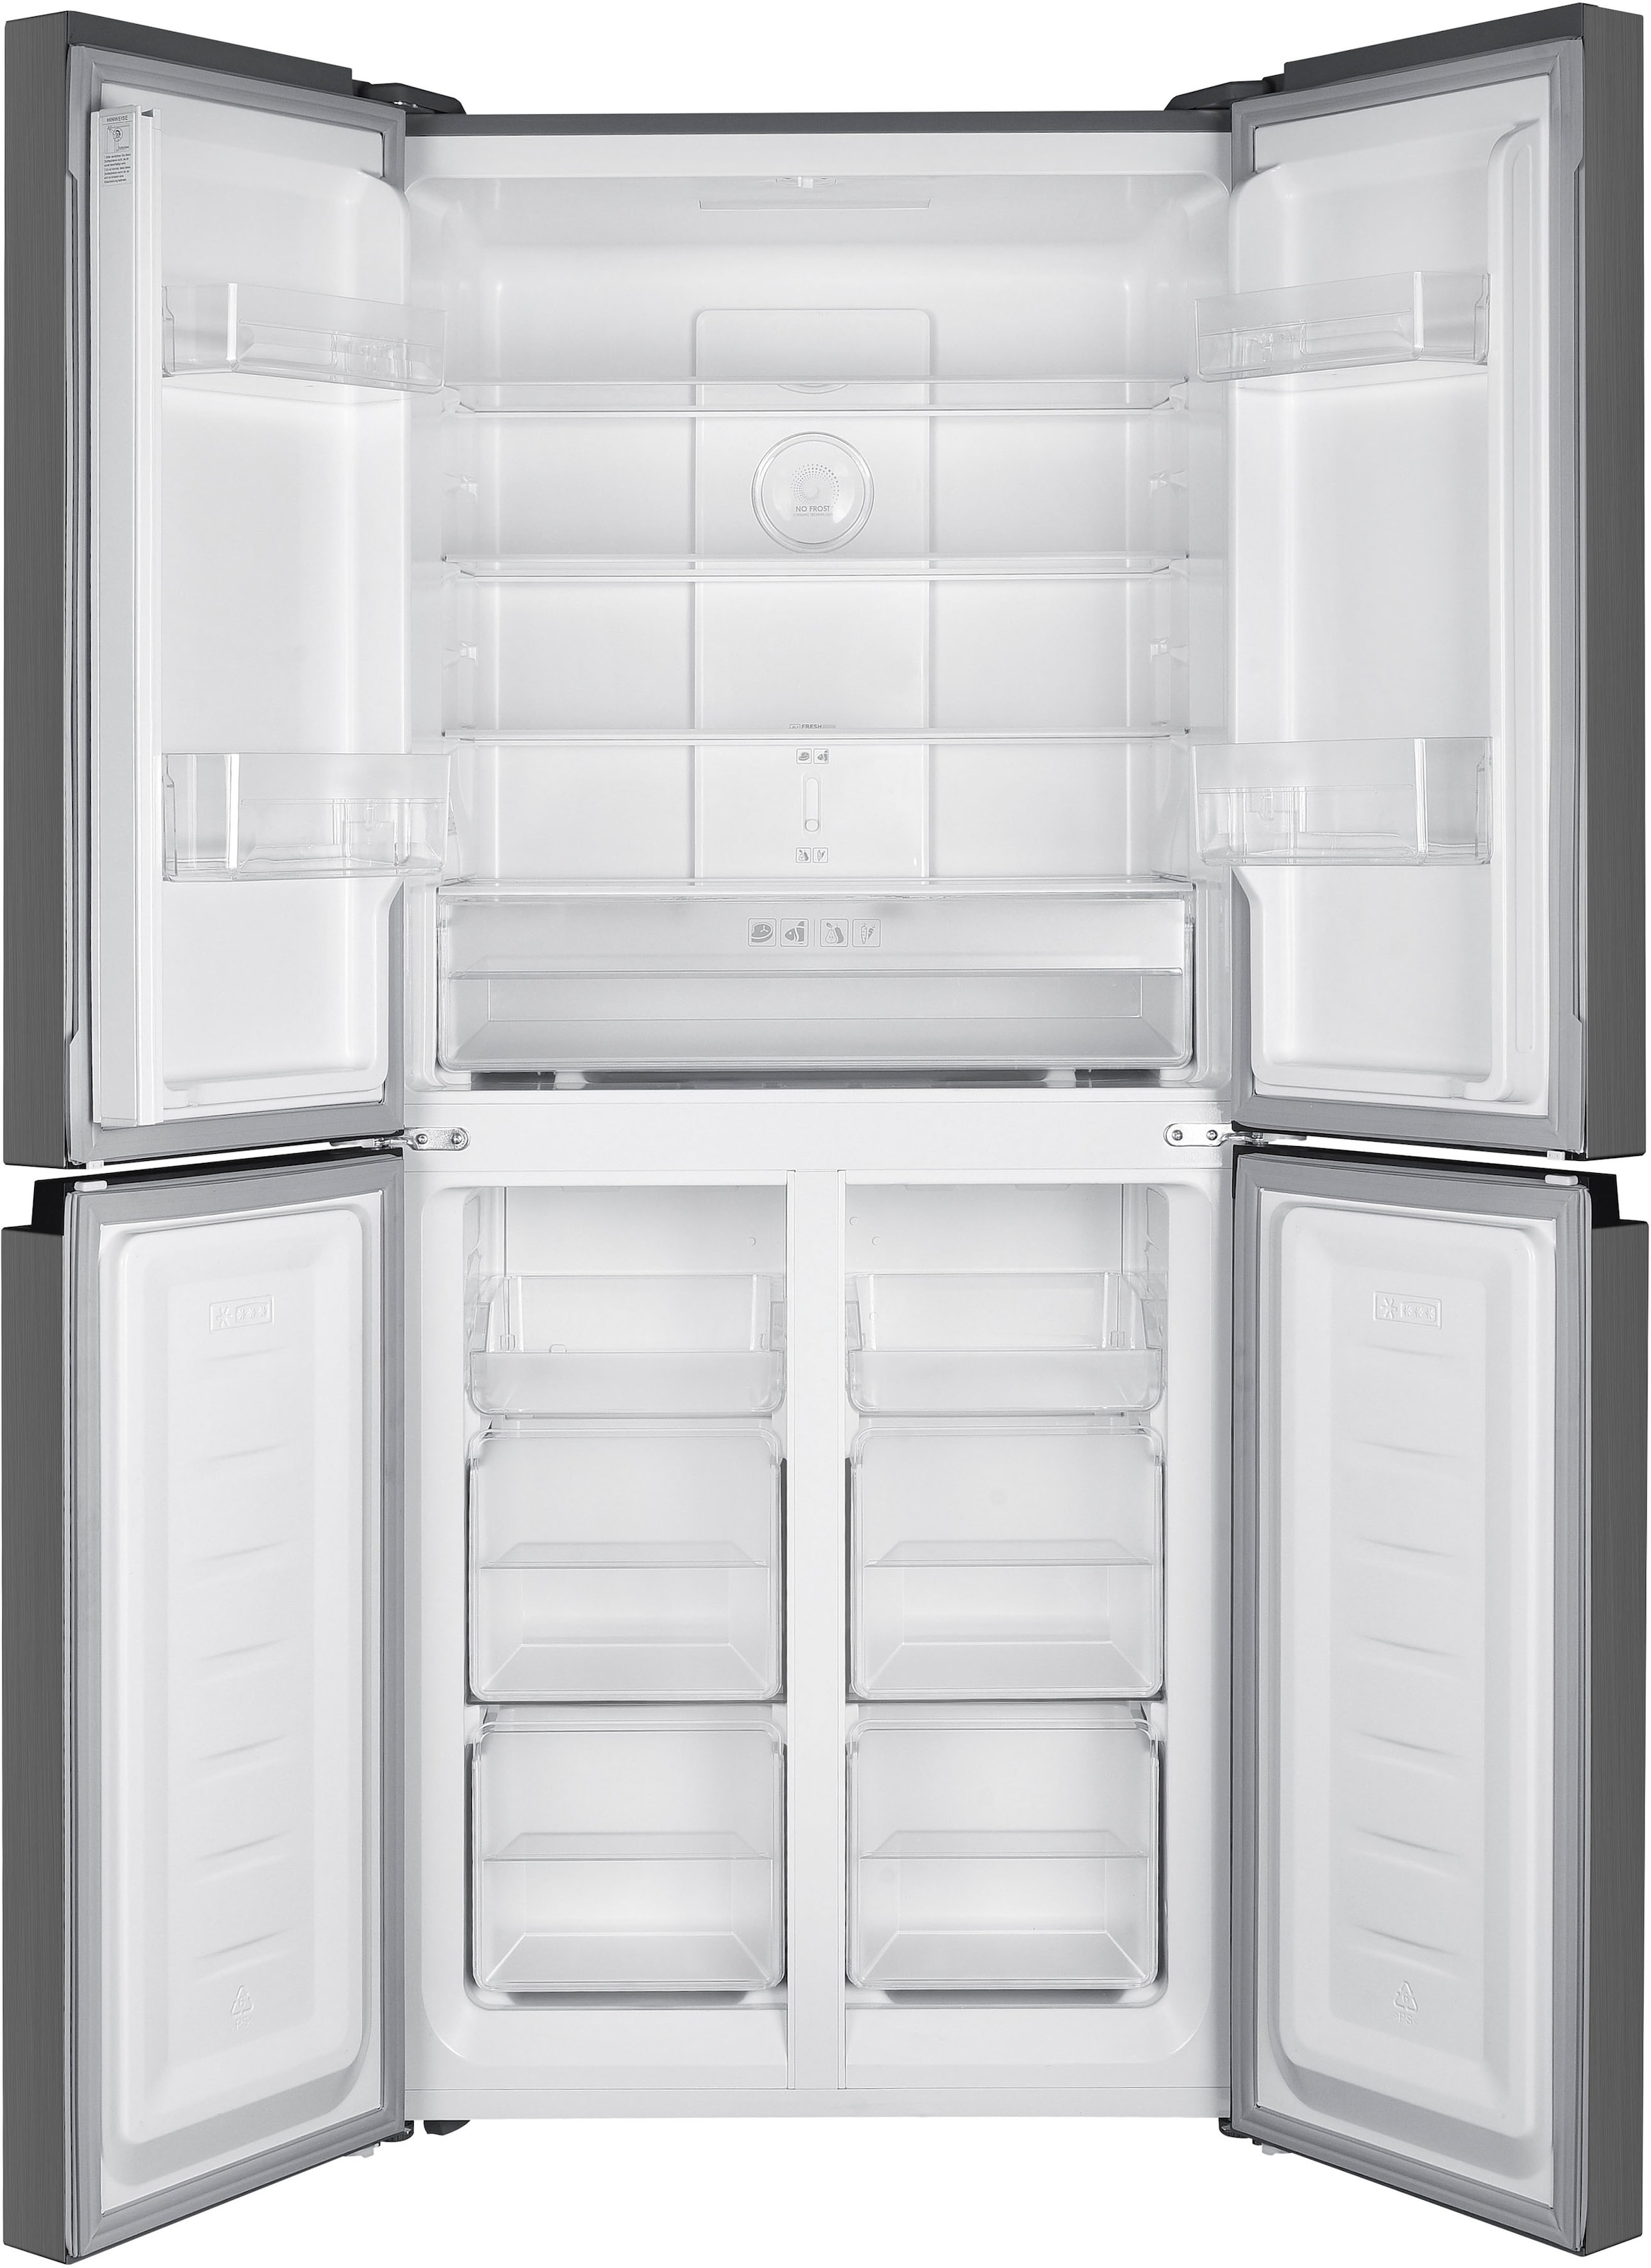 Hanseatic Multi Door, HCDD18080EI, 180,0 cm hoch, 79,0 cm breit, NoFrost, Türalarm